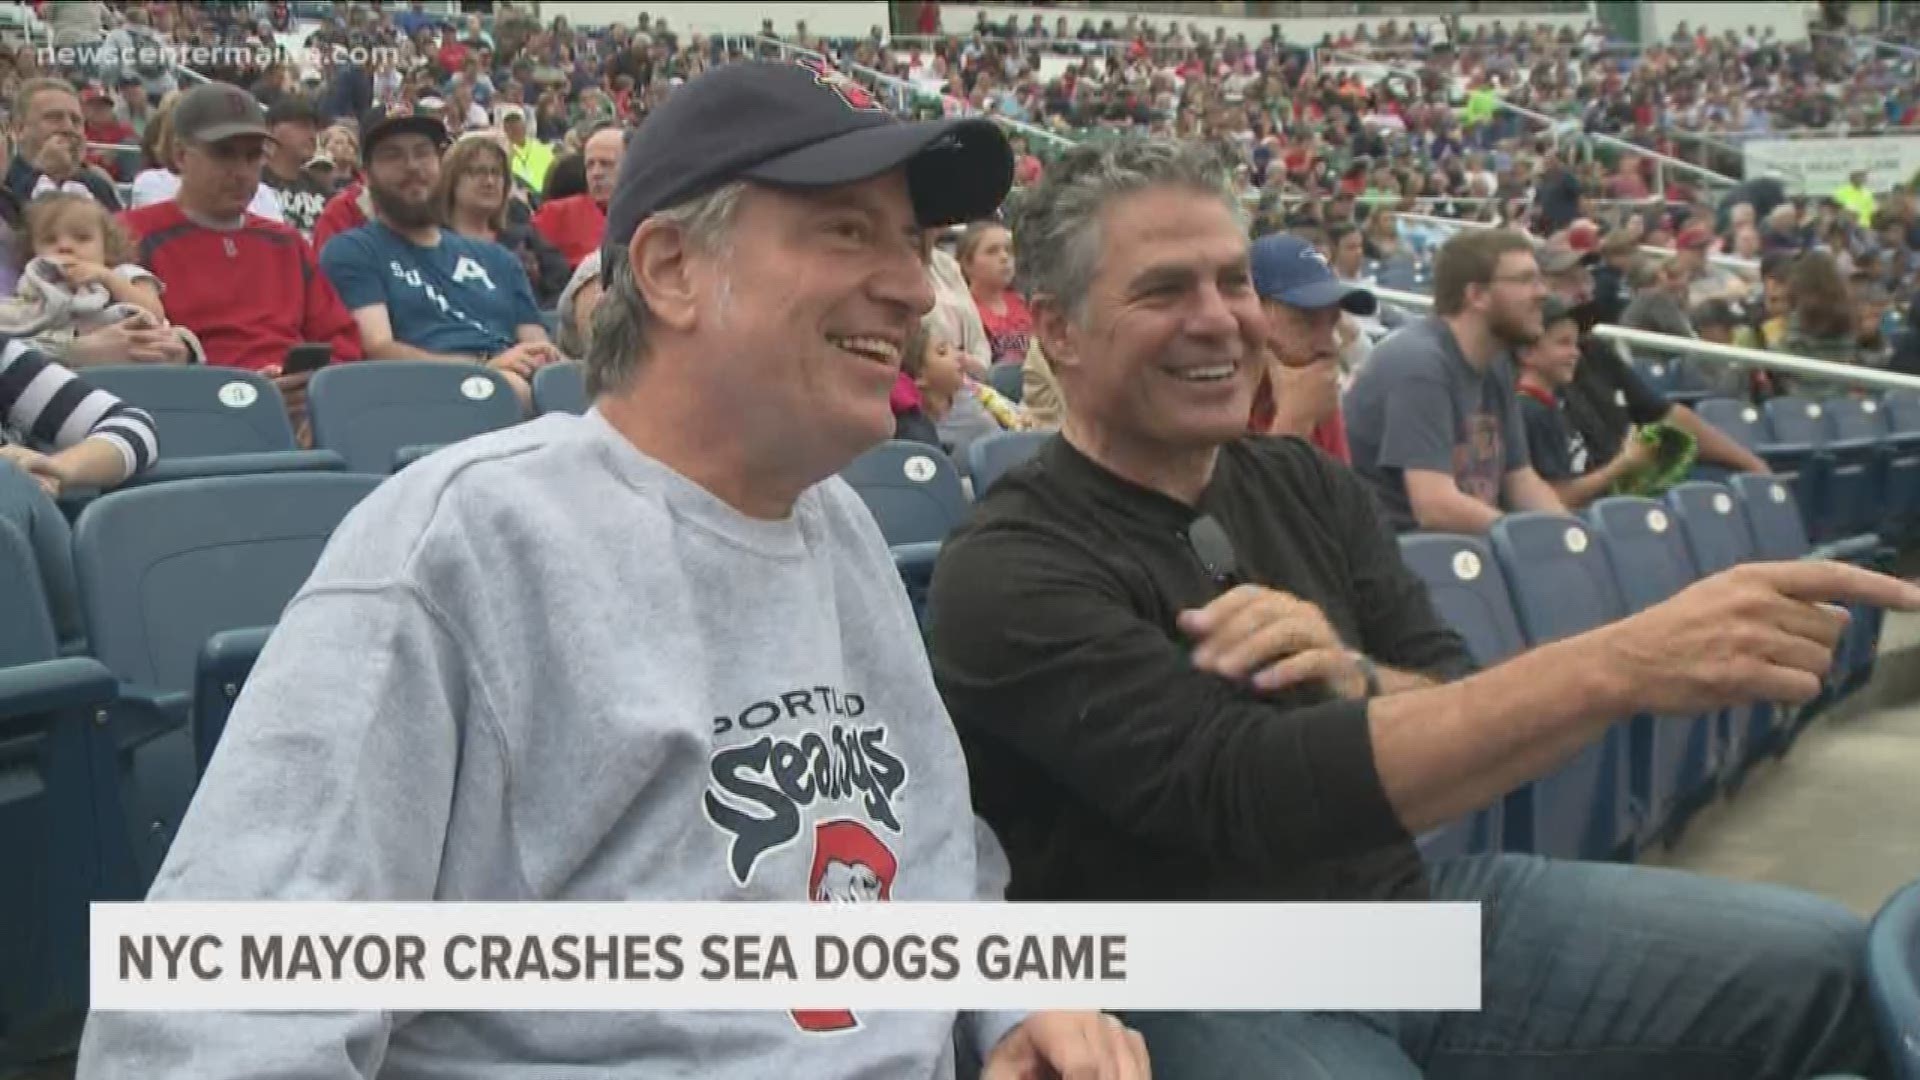 NYC and Portland Mayor watch Sea Dogs game